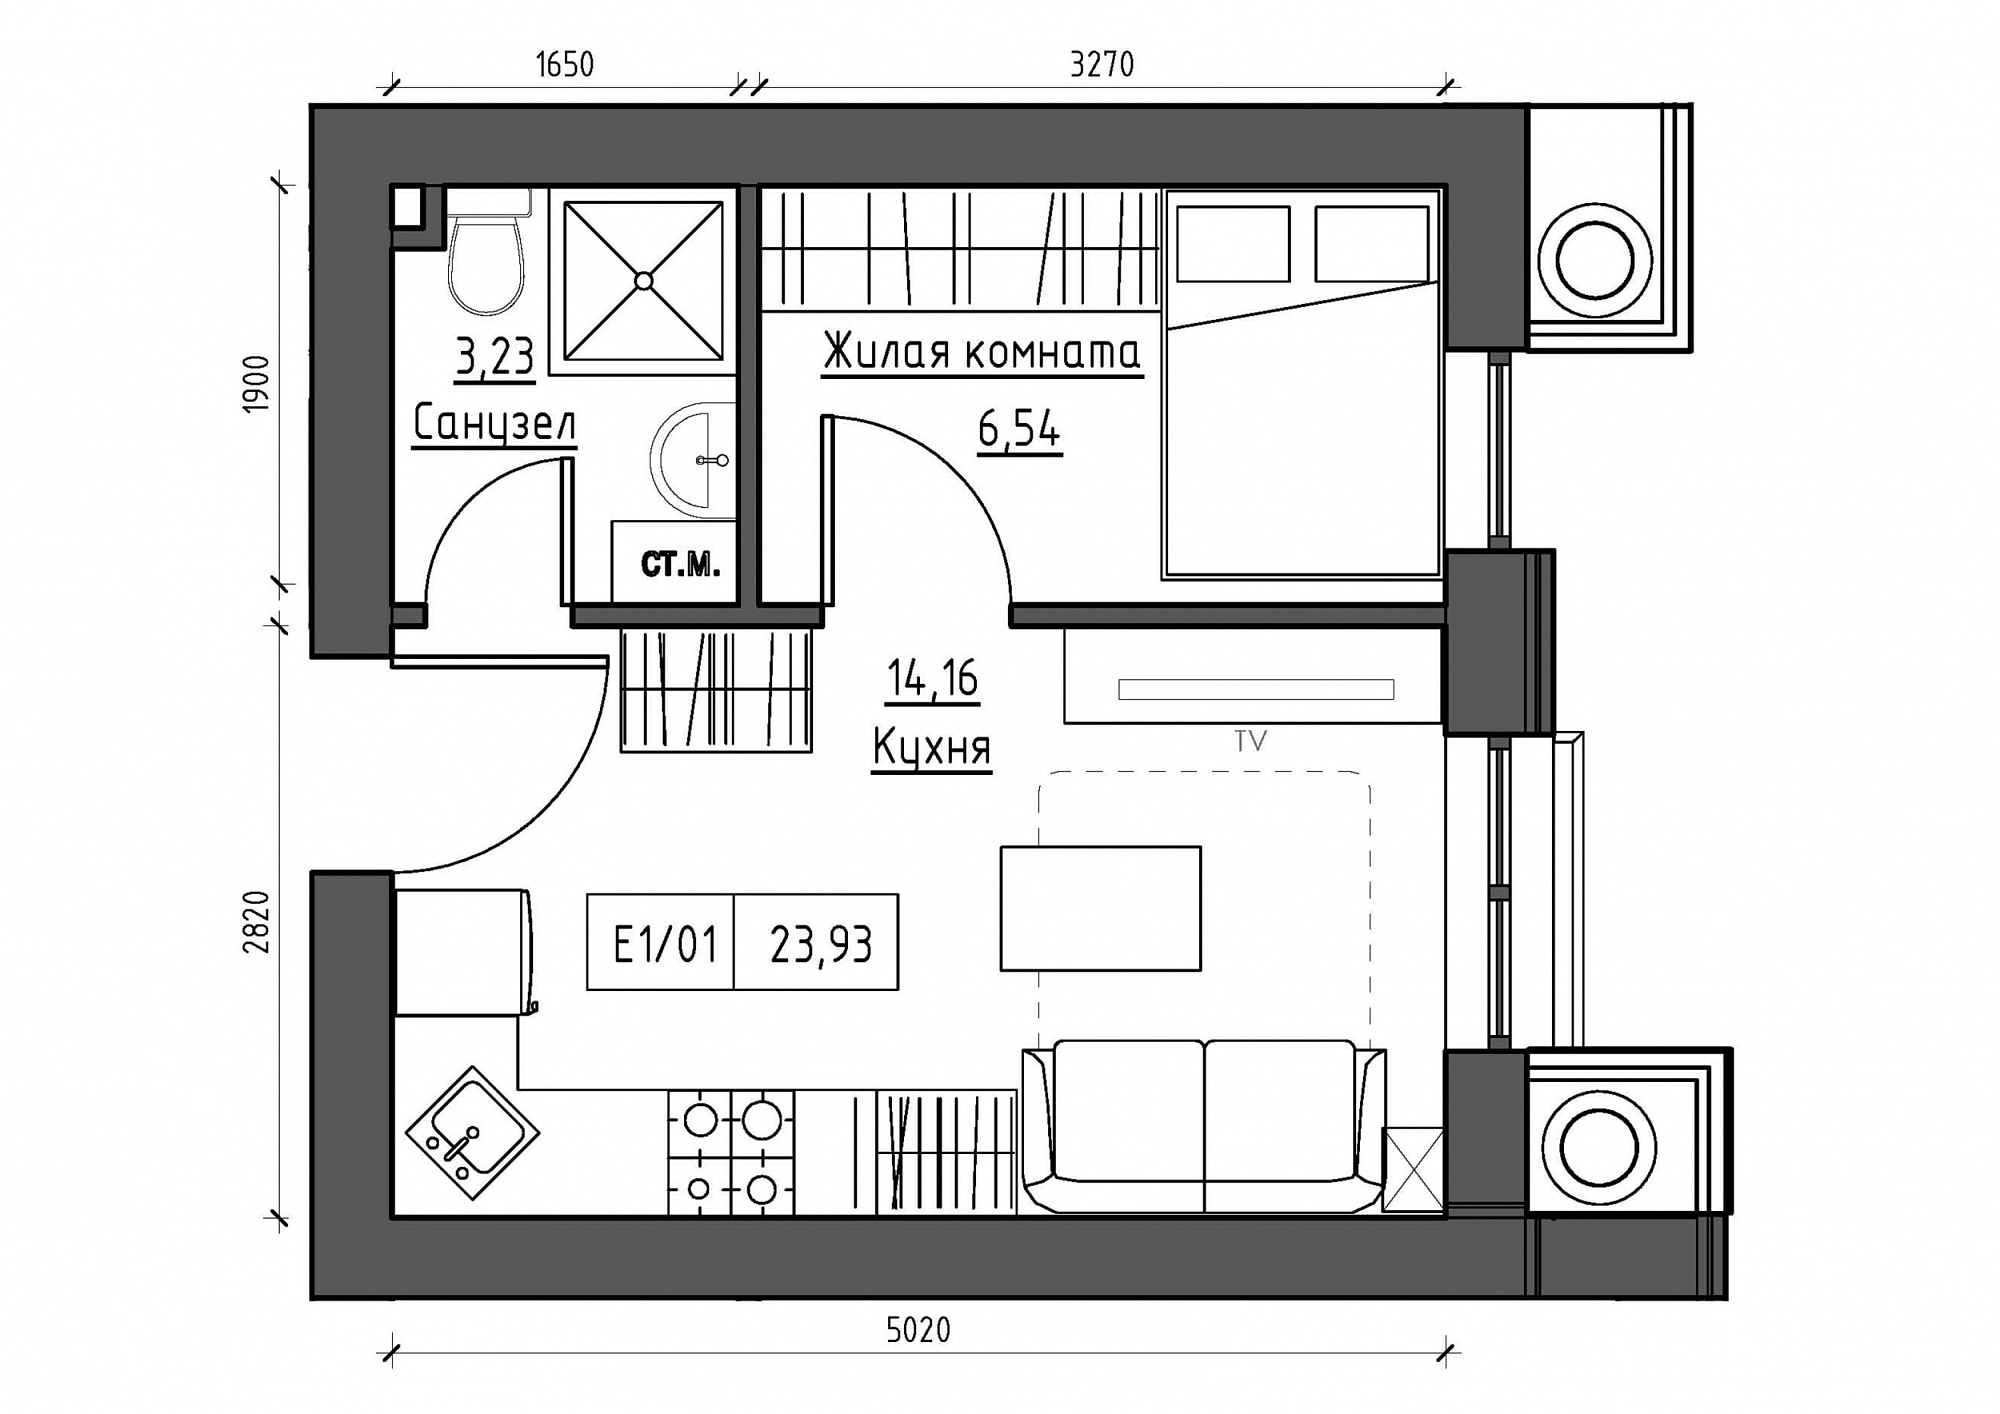 Planning 1-rm flats area 23.93m2, KS-011-02/0004.